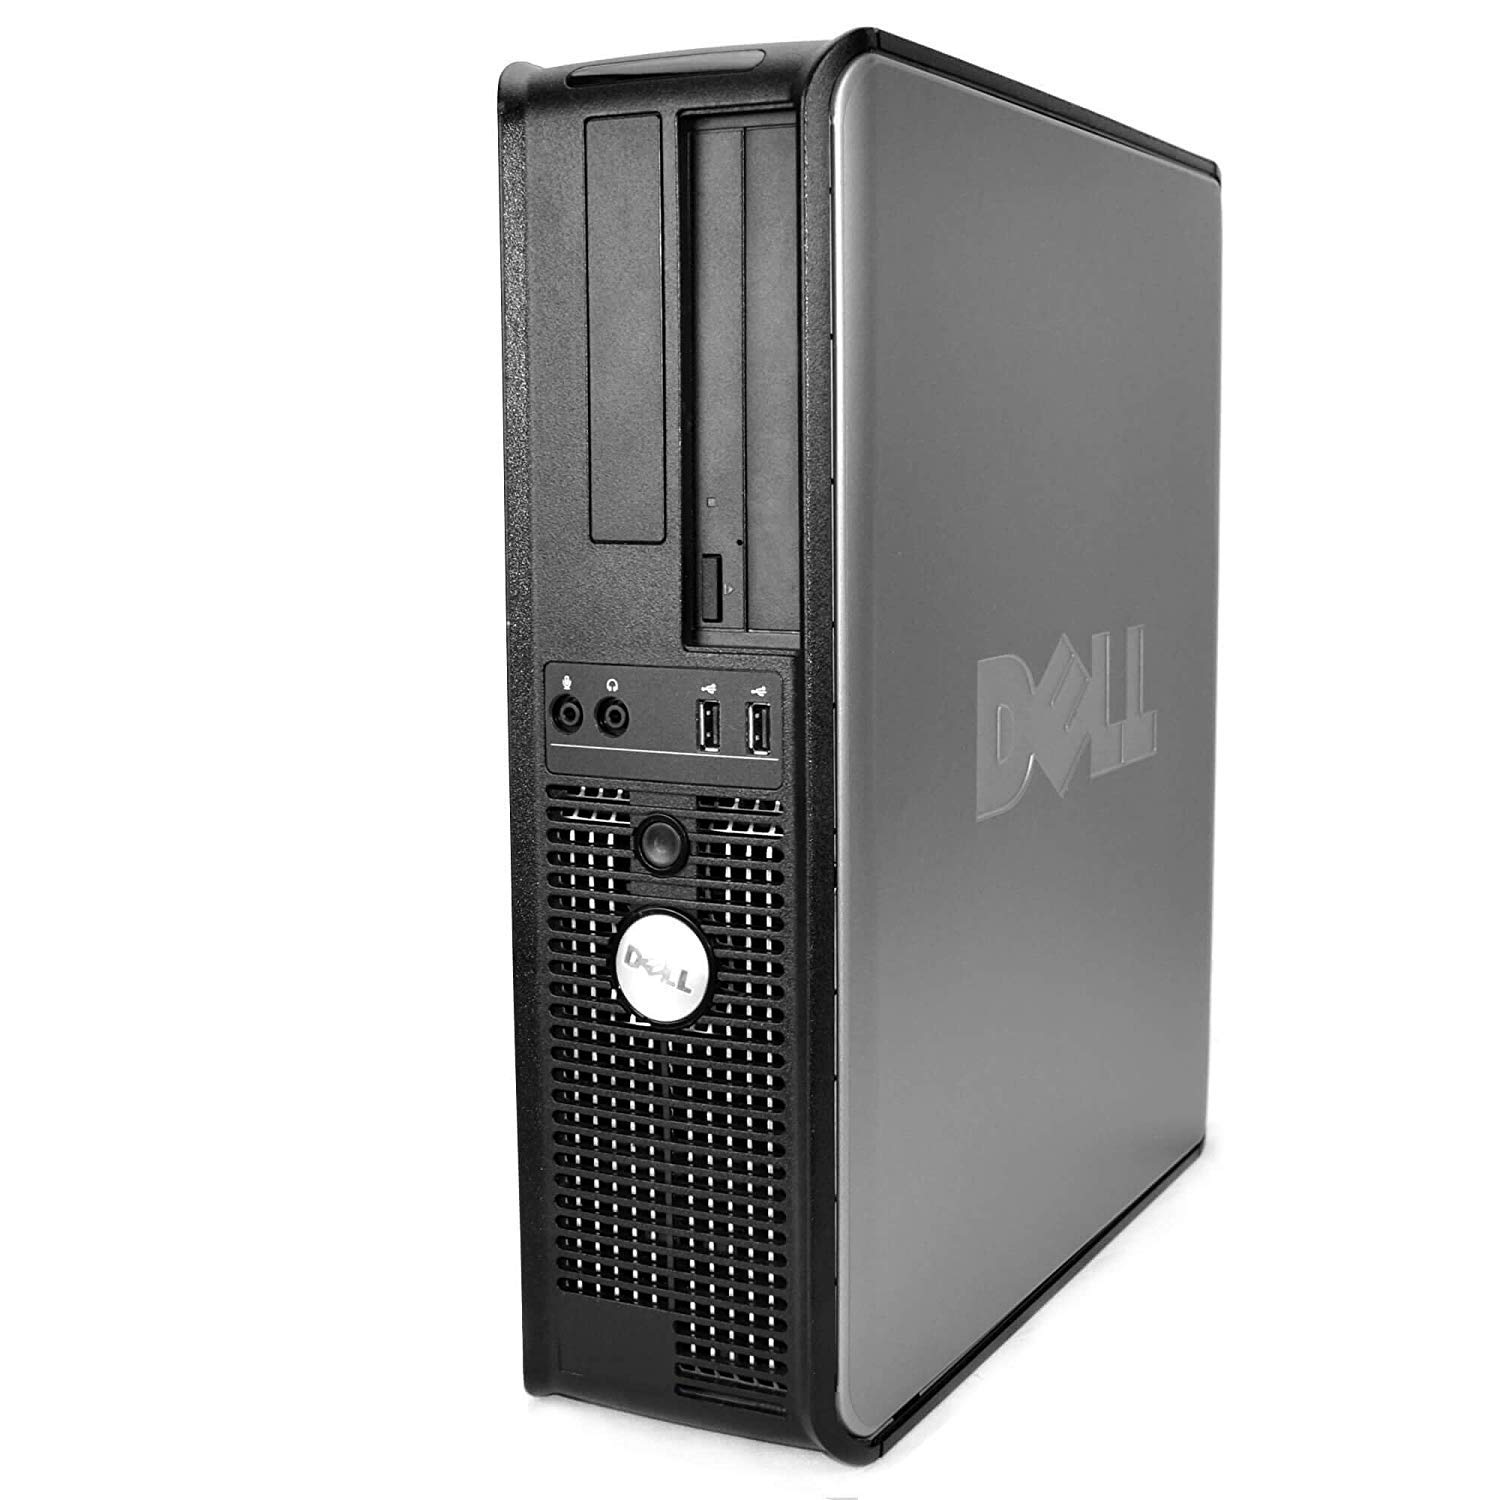 Dell Desktop PC 780 C2D E8400 3.0GHz, 8G DDR3, 1TB, DVD, Windows 10 Pro 64 (Renewed)